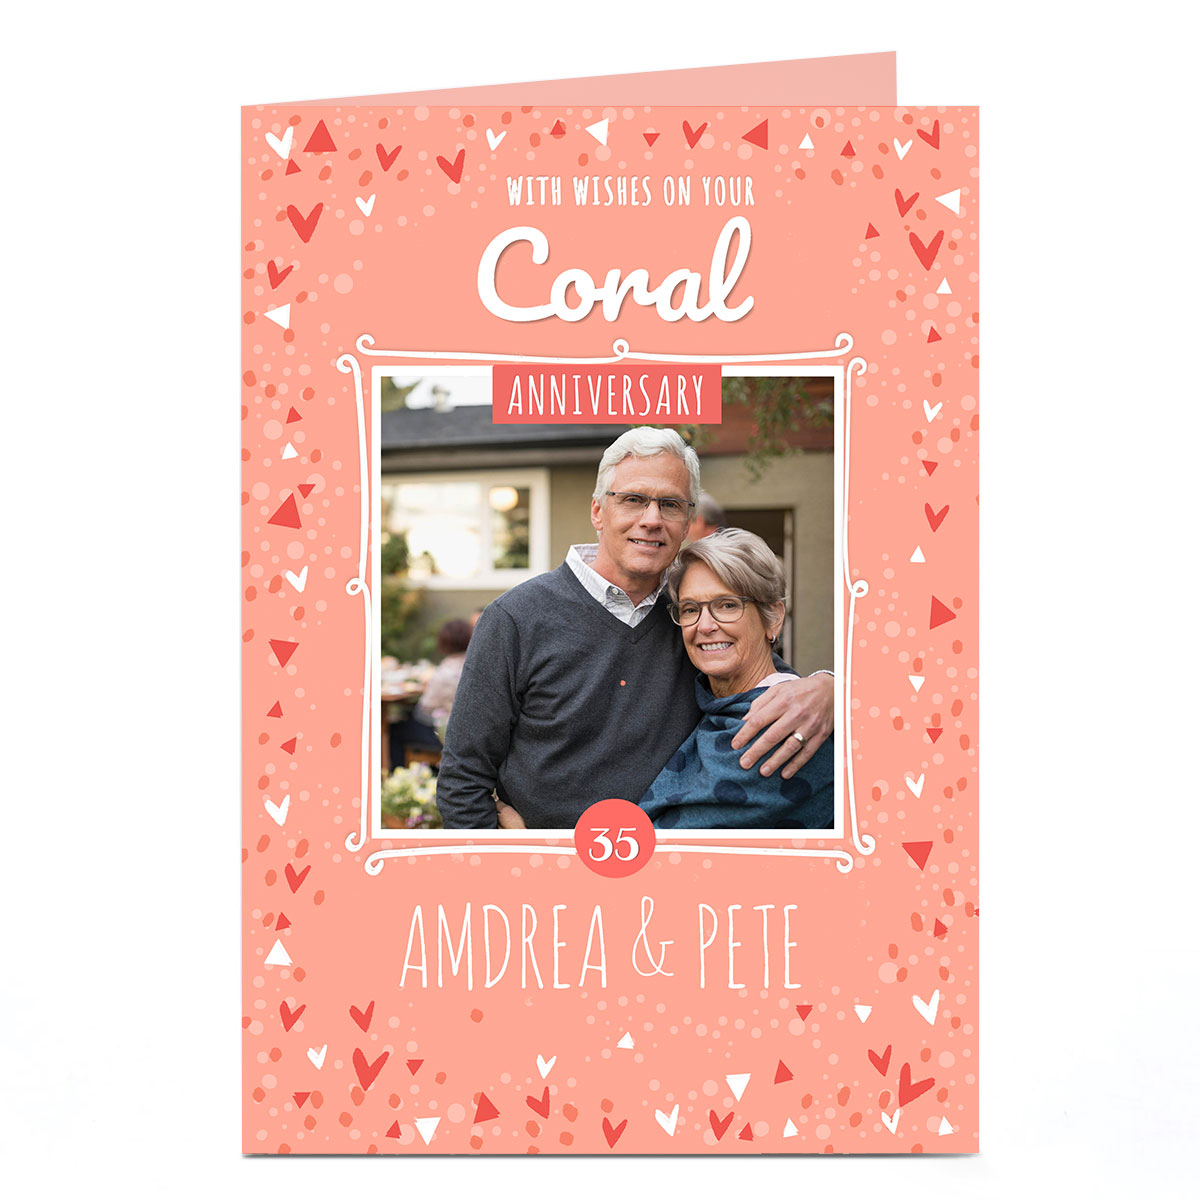 Personalised Anniversary Photo Card - Coral Anniversary 